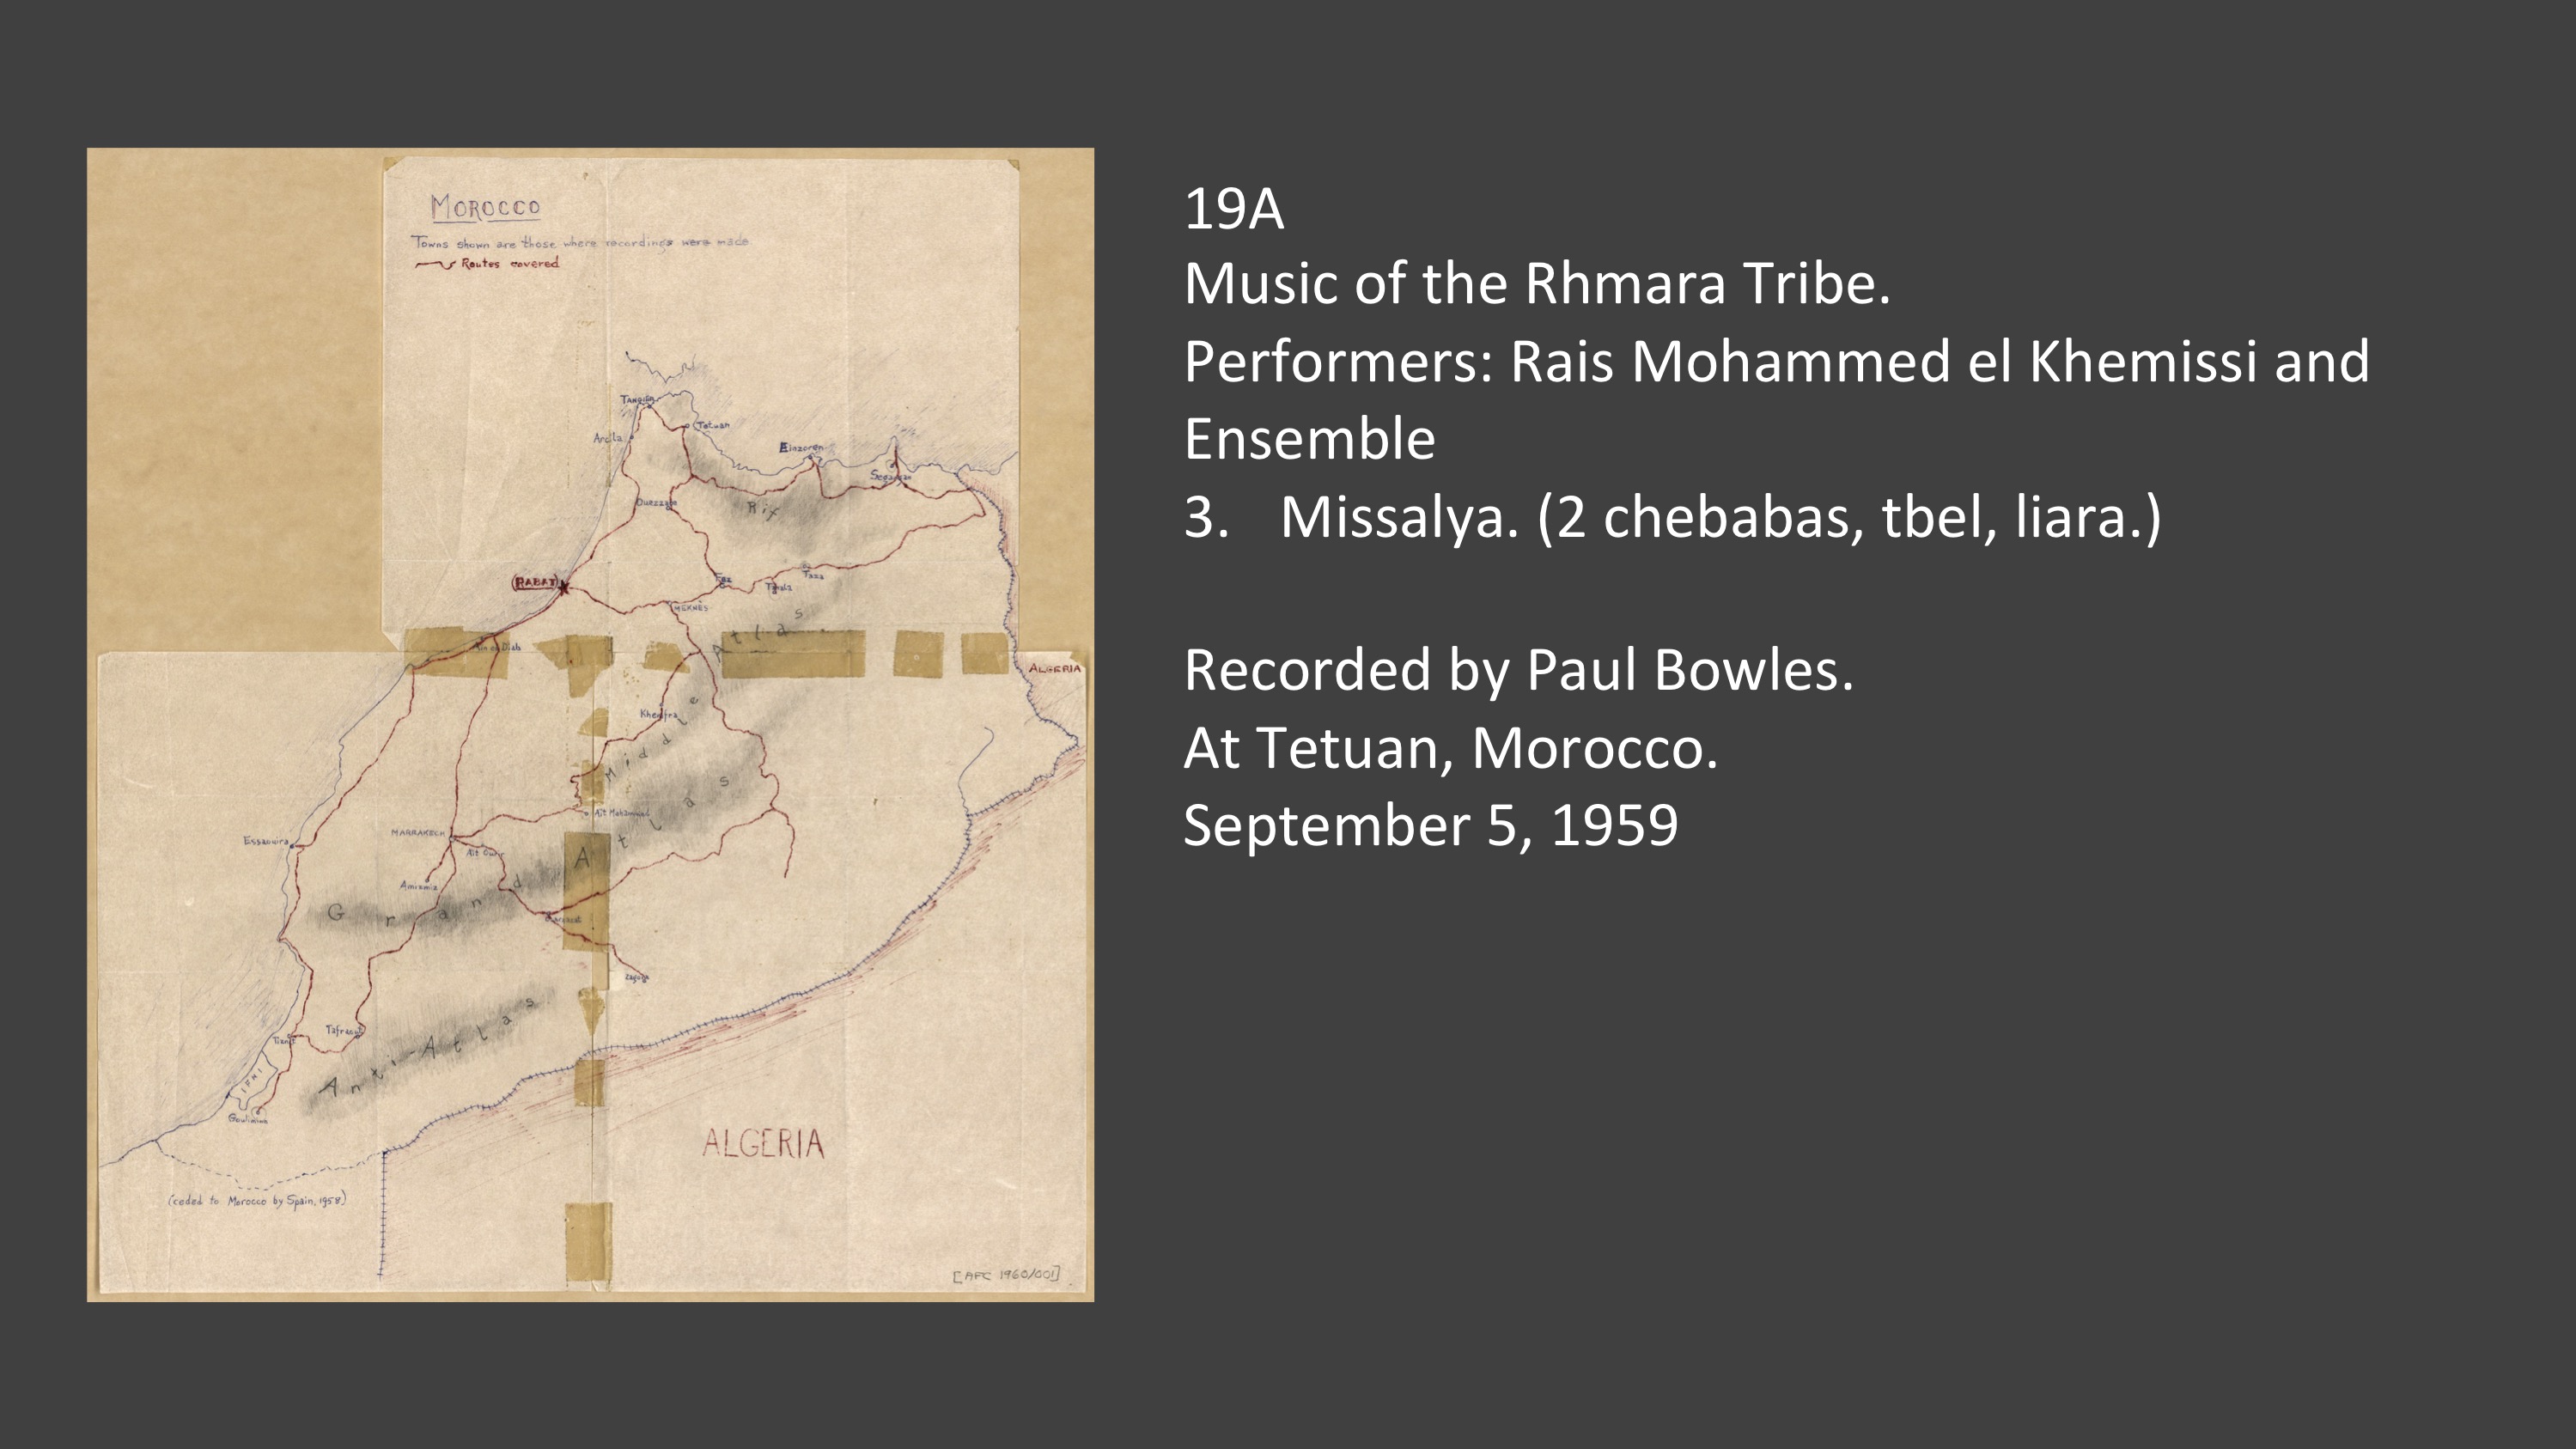 19A 3. Missalya. (2 chebabas, tbel, liara.)
Performers: Rais Mohammed el Khemissi and Ensemble
Recorded by Paul Bowles.
At Tetuan, Morocco.
September 5, 1959
September 5, 1959

